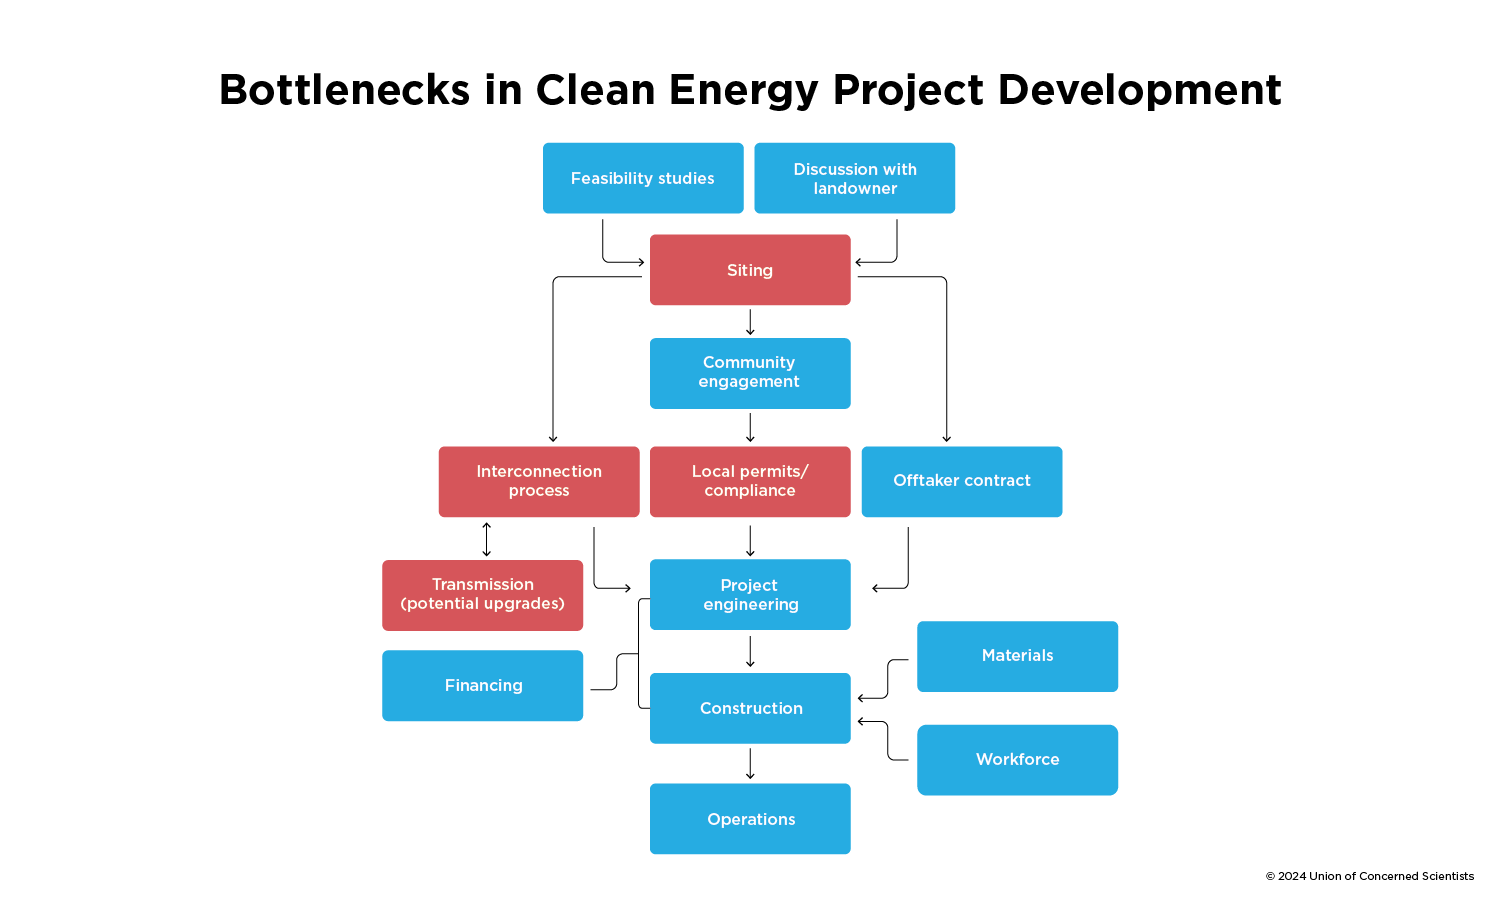 A flowchart showing the bottlenecks in clean energy project development.